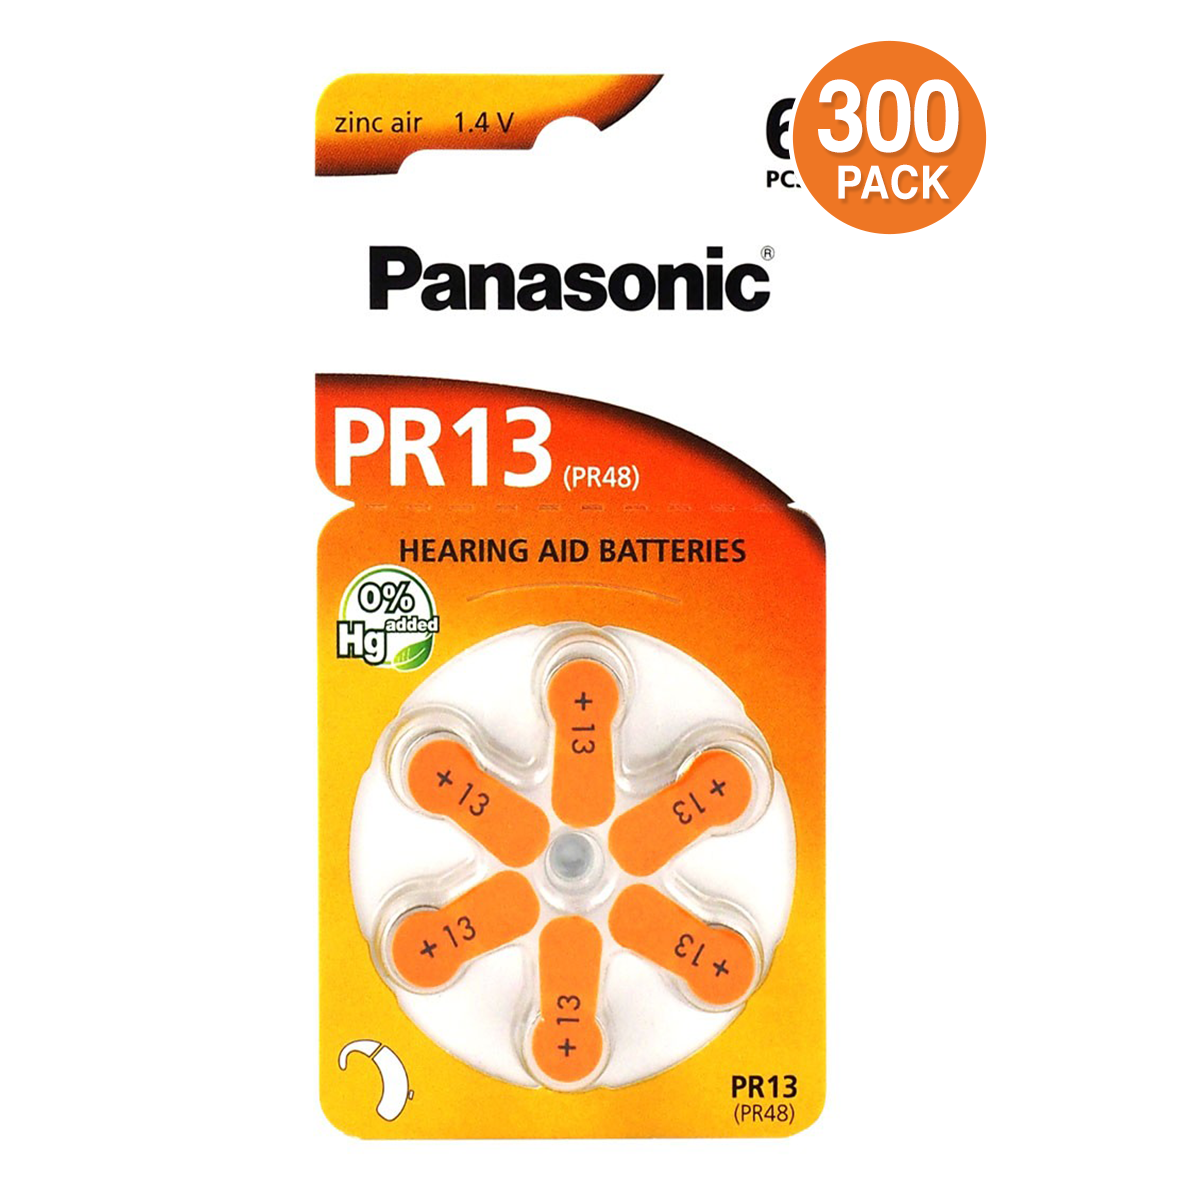 Panasonic Size 13 Hearing Aid Batteries 1.4 Volt Zinc Air (300 Batteries)